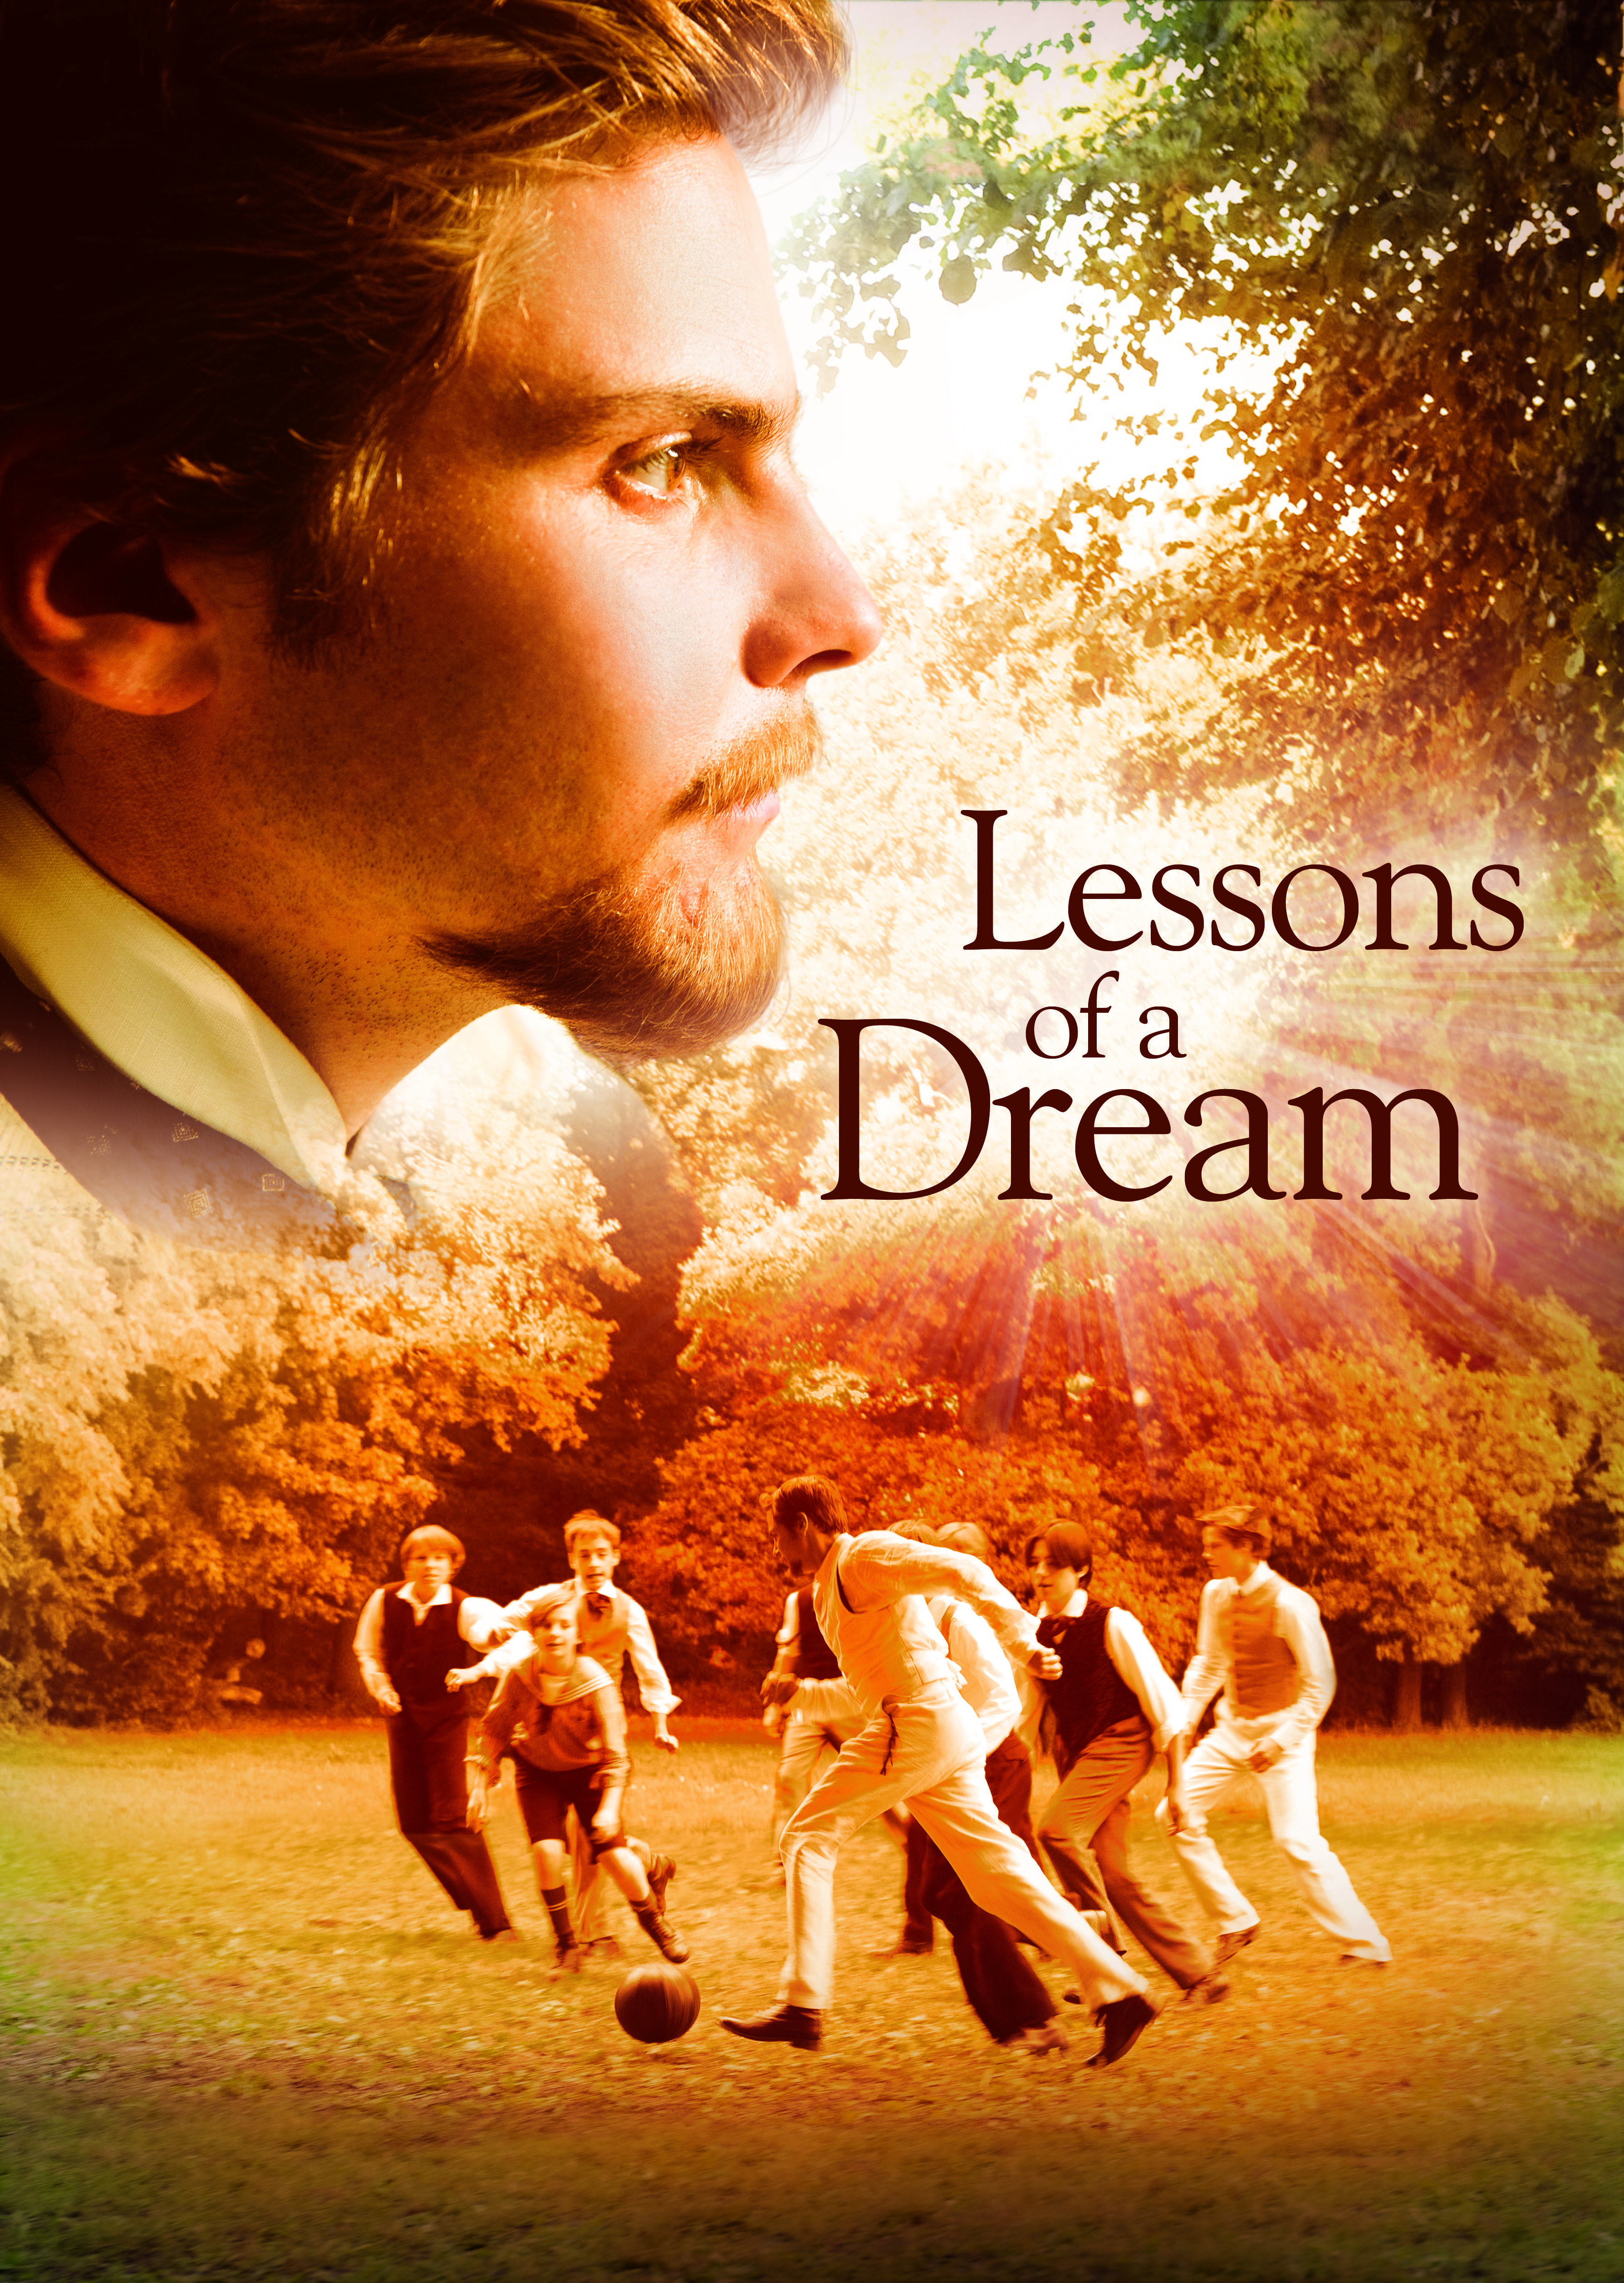 Lessons of a Dream (2011) Screenshot 1